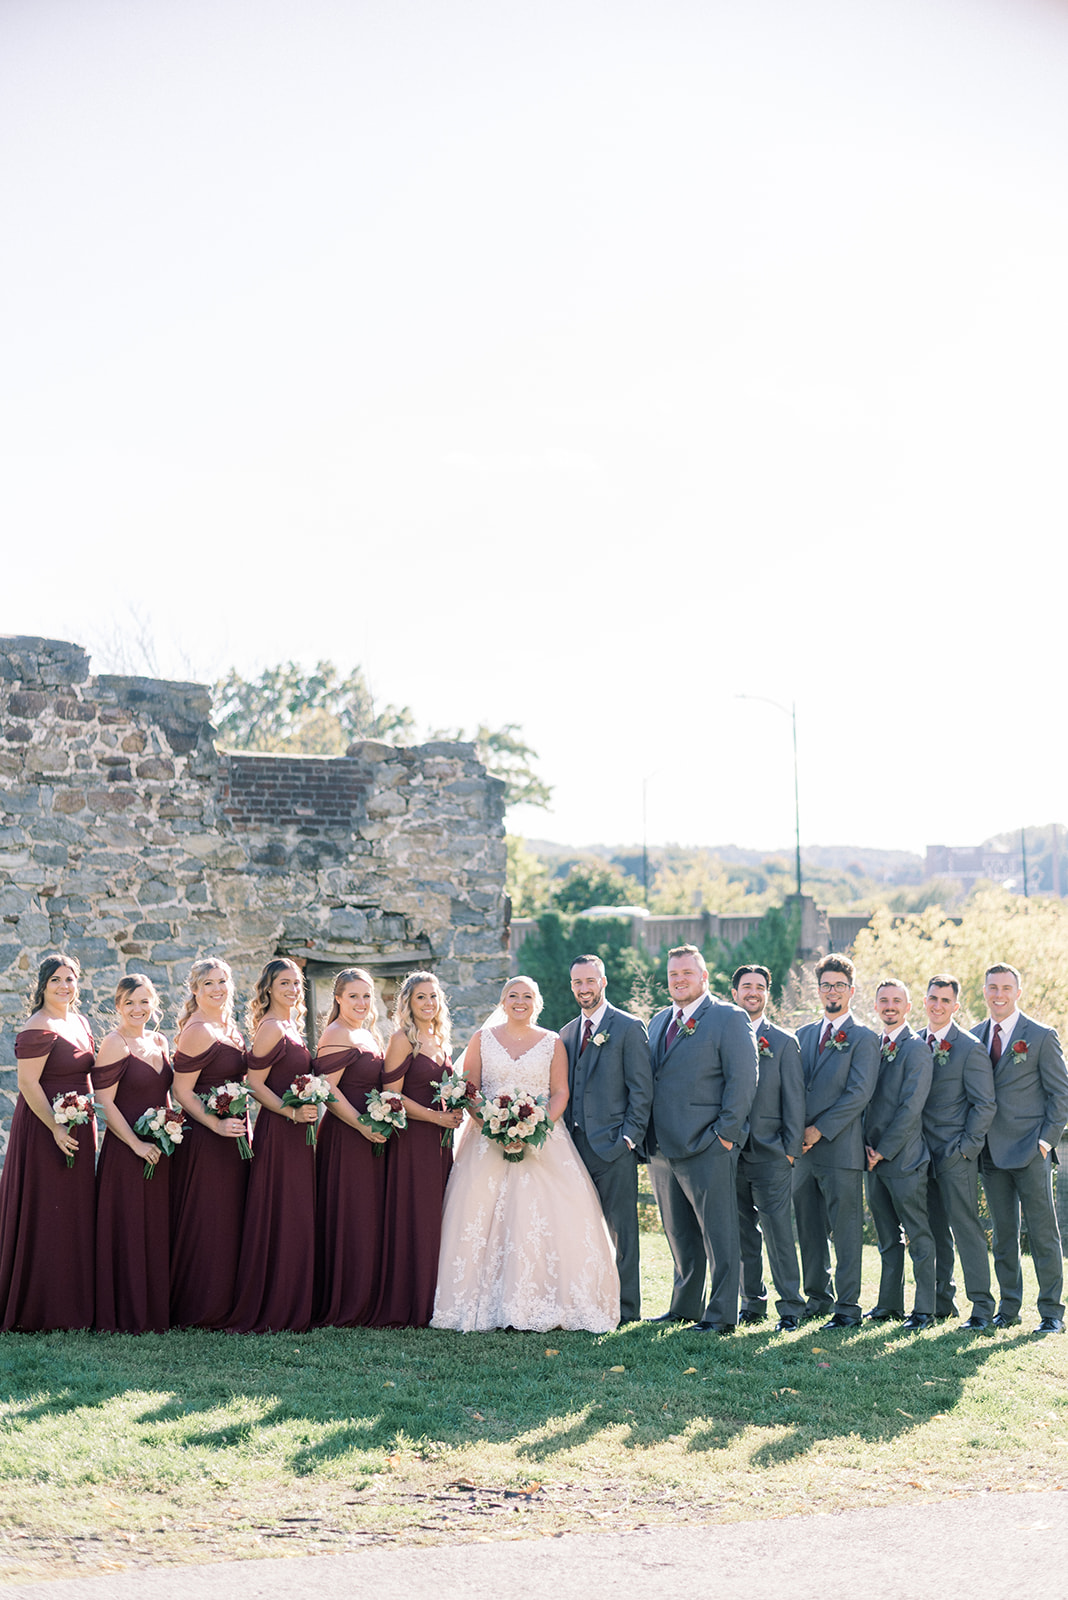 Pennsylvania wedding photographer captures wedding party